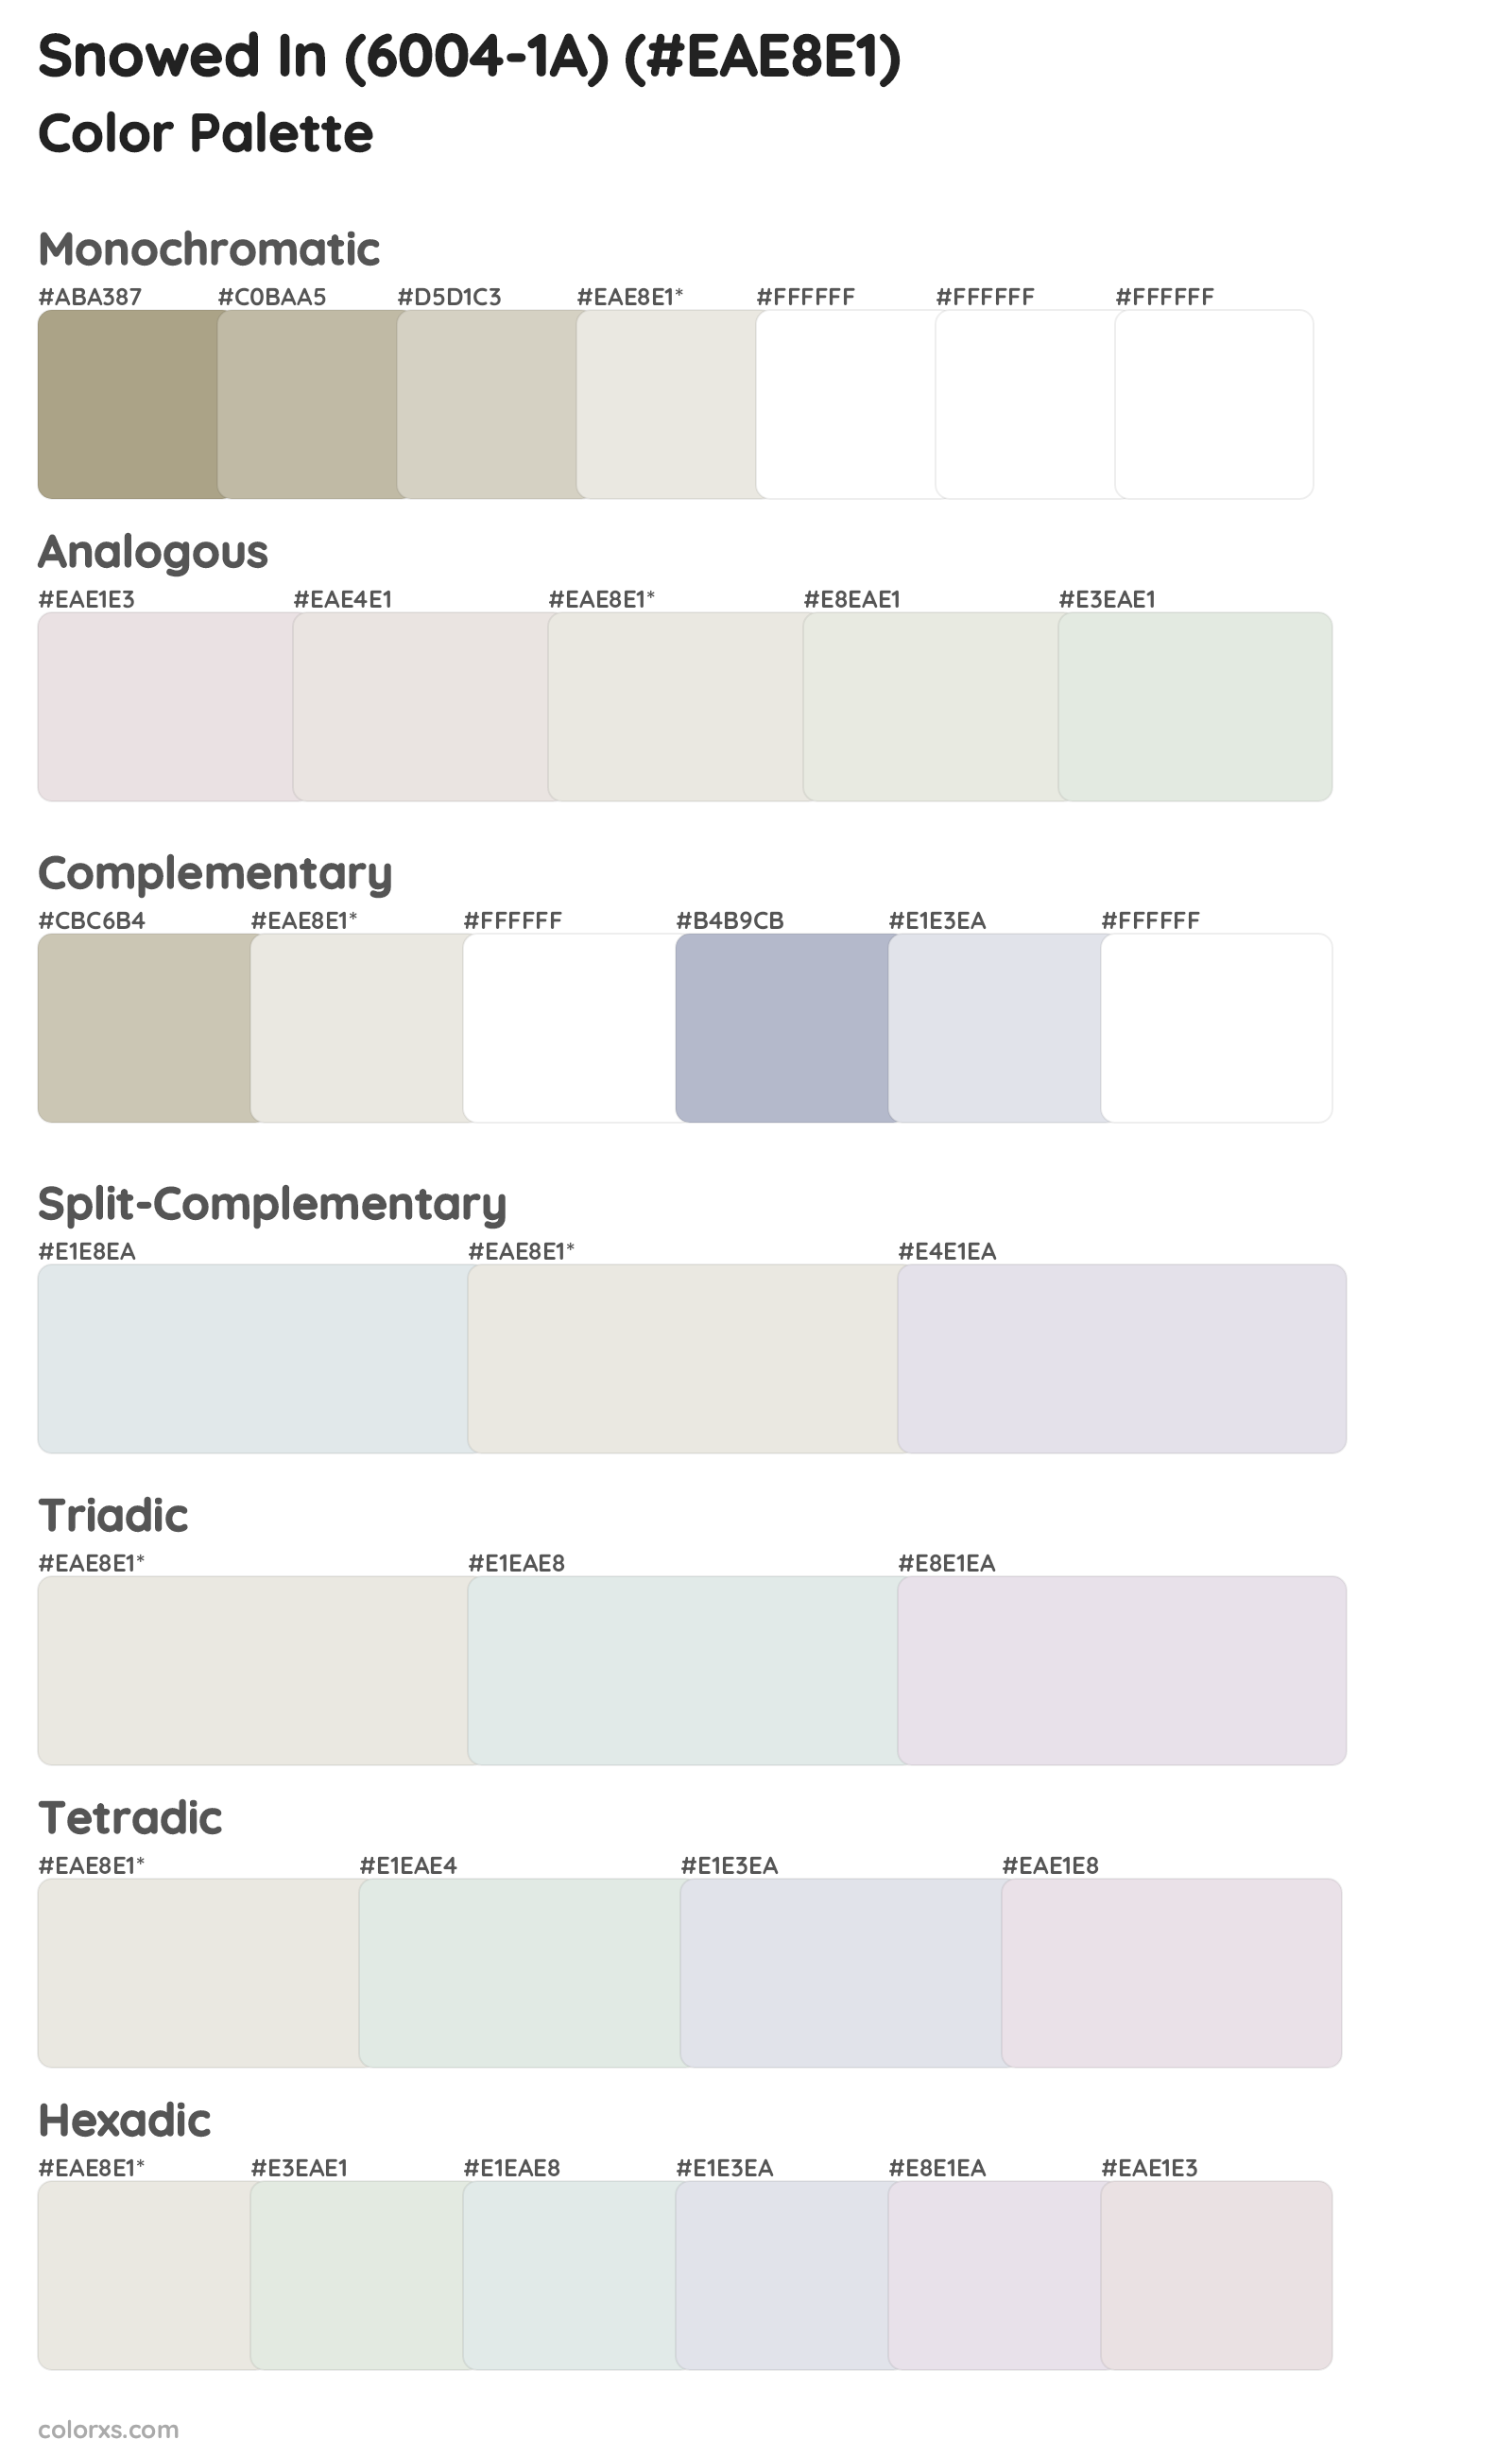 Snowed In (6004-1A) Color Scheme Palettes